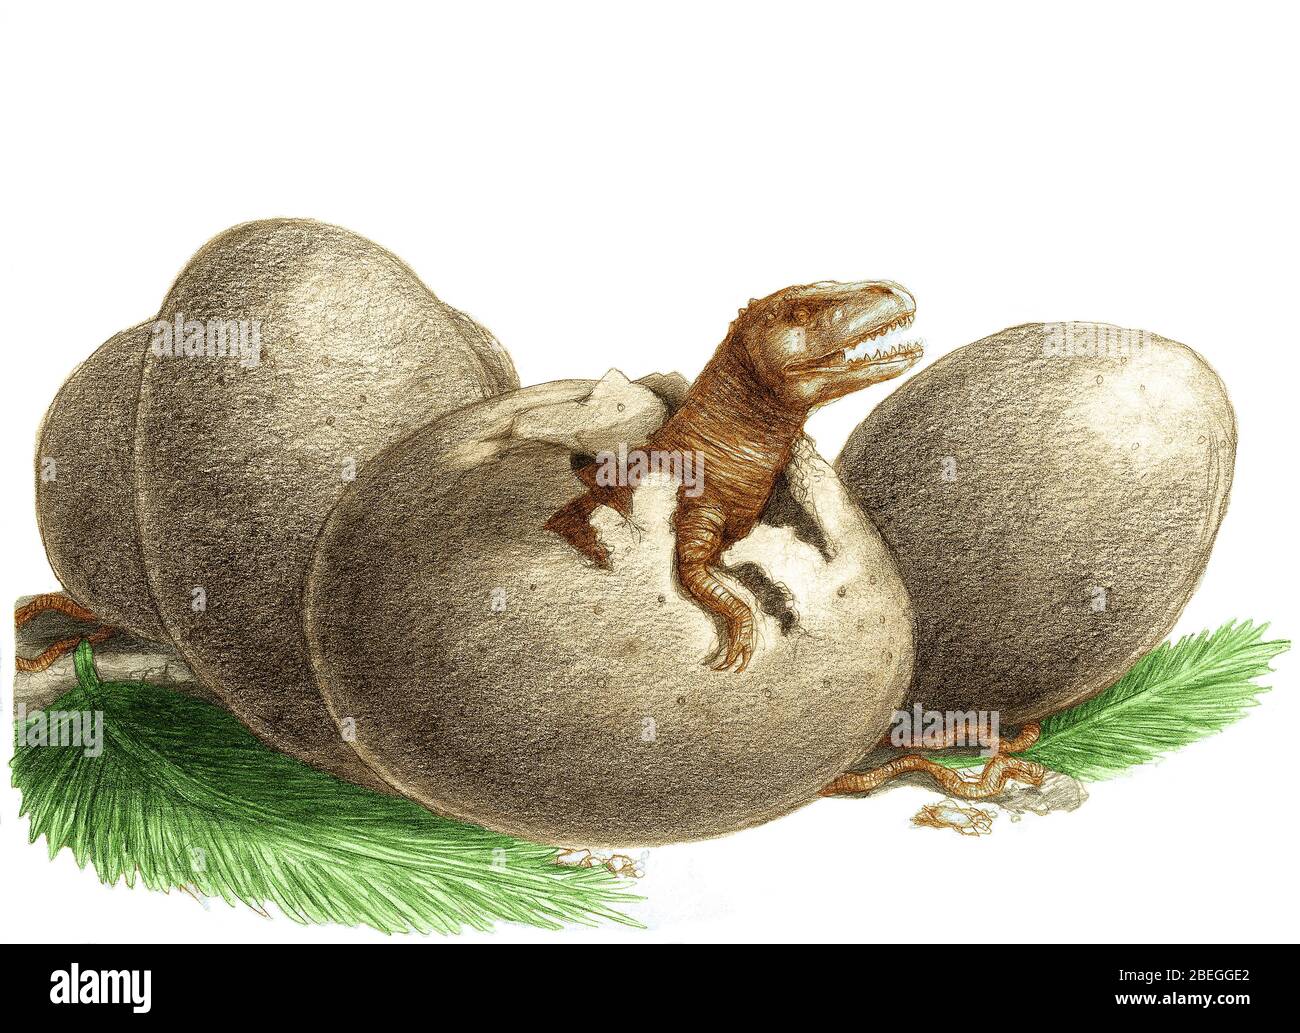 Huevo de dinosaurio fotografías e imágenes de alta resolución - Alamy